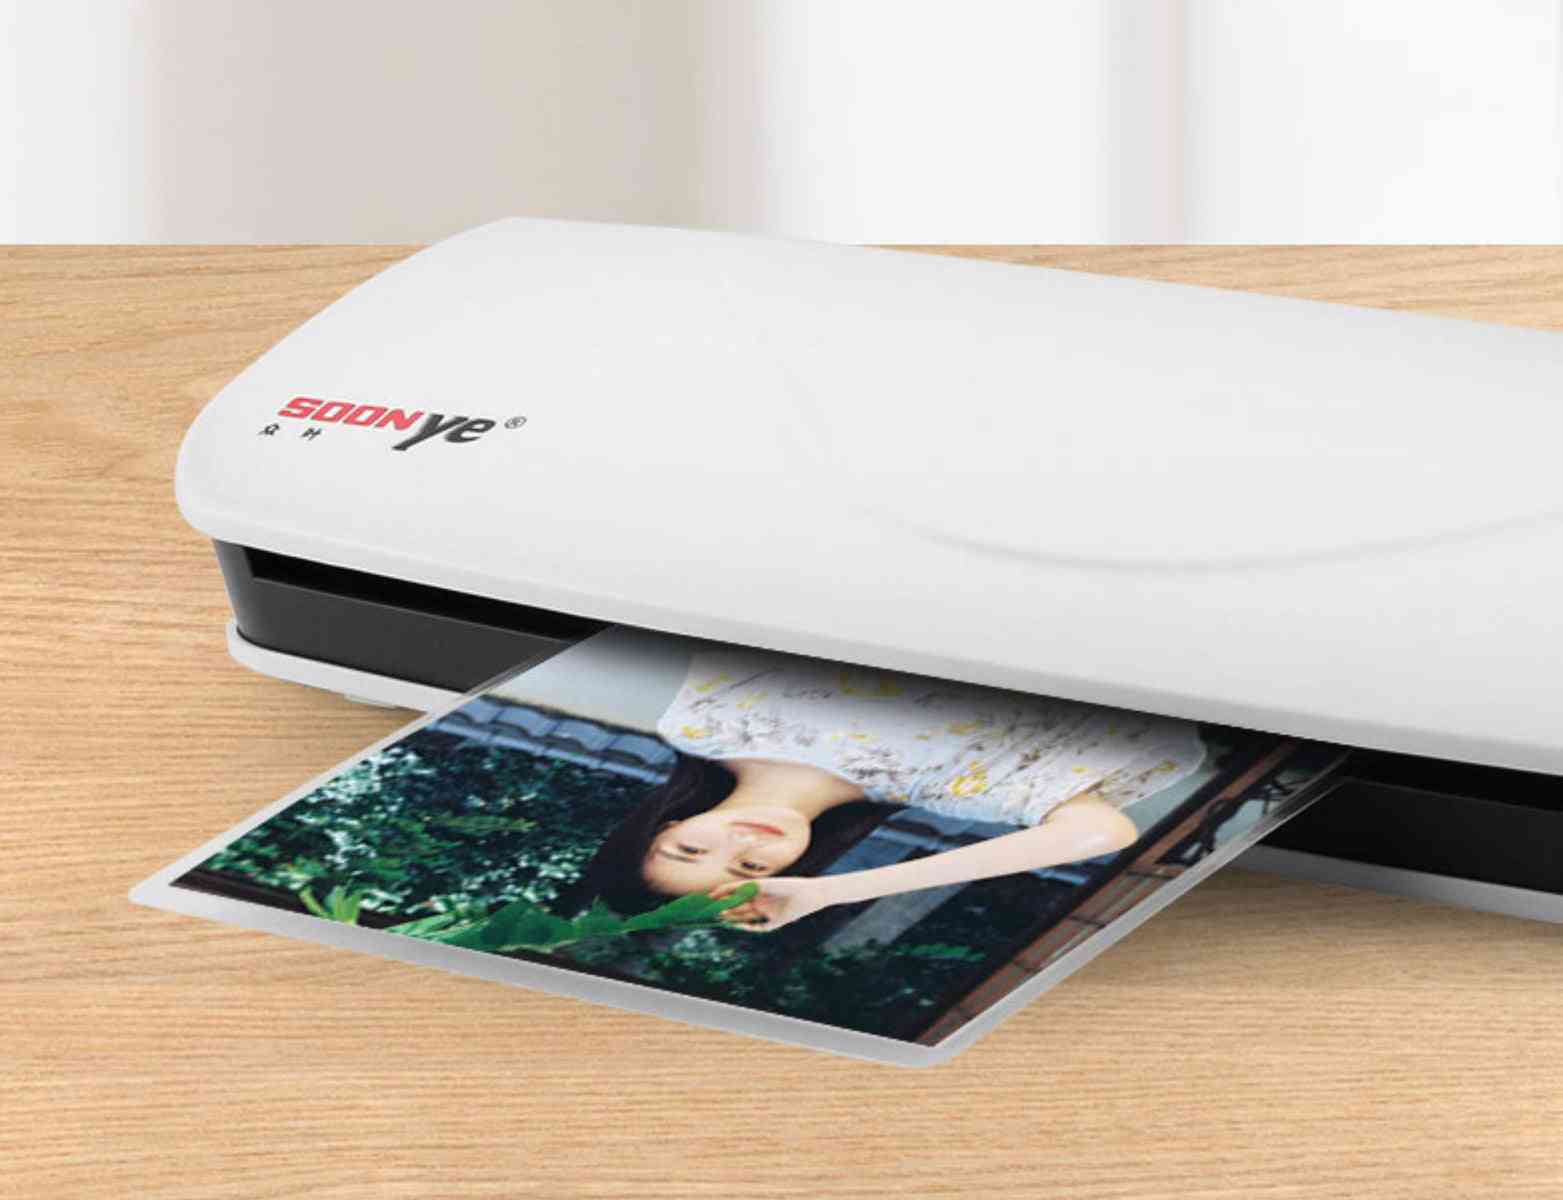 Máquina laminadora en frío y caliente de oficina térmica para laminador de rollo de película plástica de embalaje de blíster de fotos de documentos a4